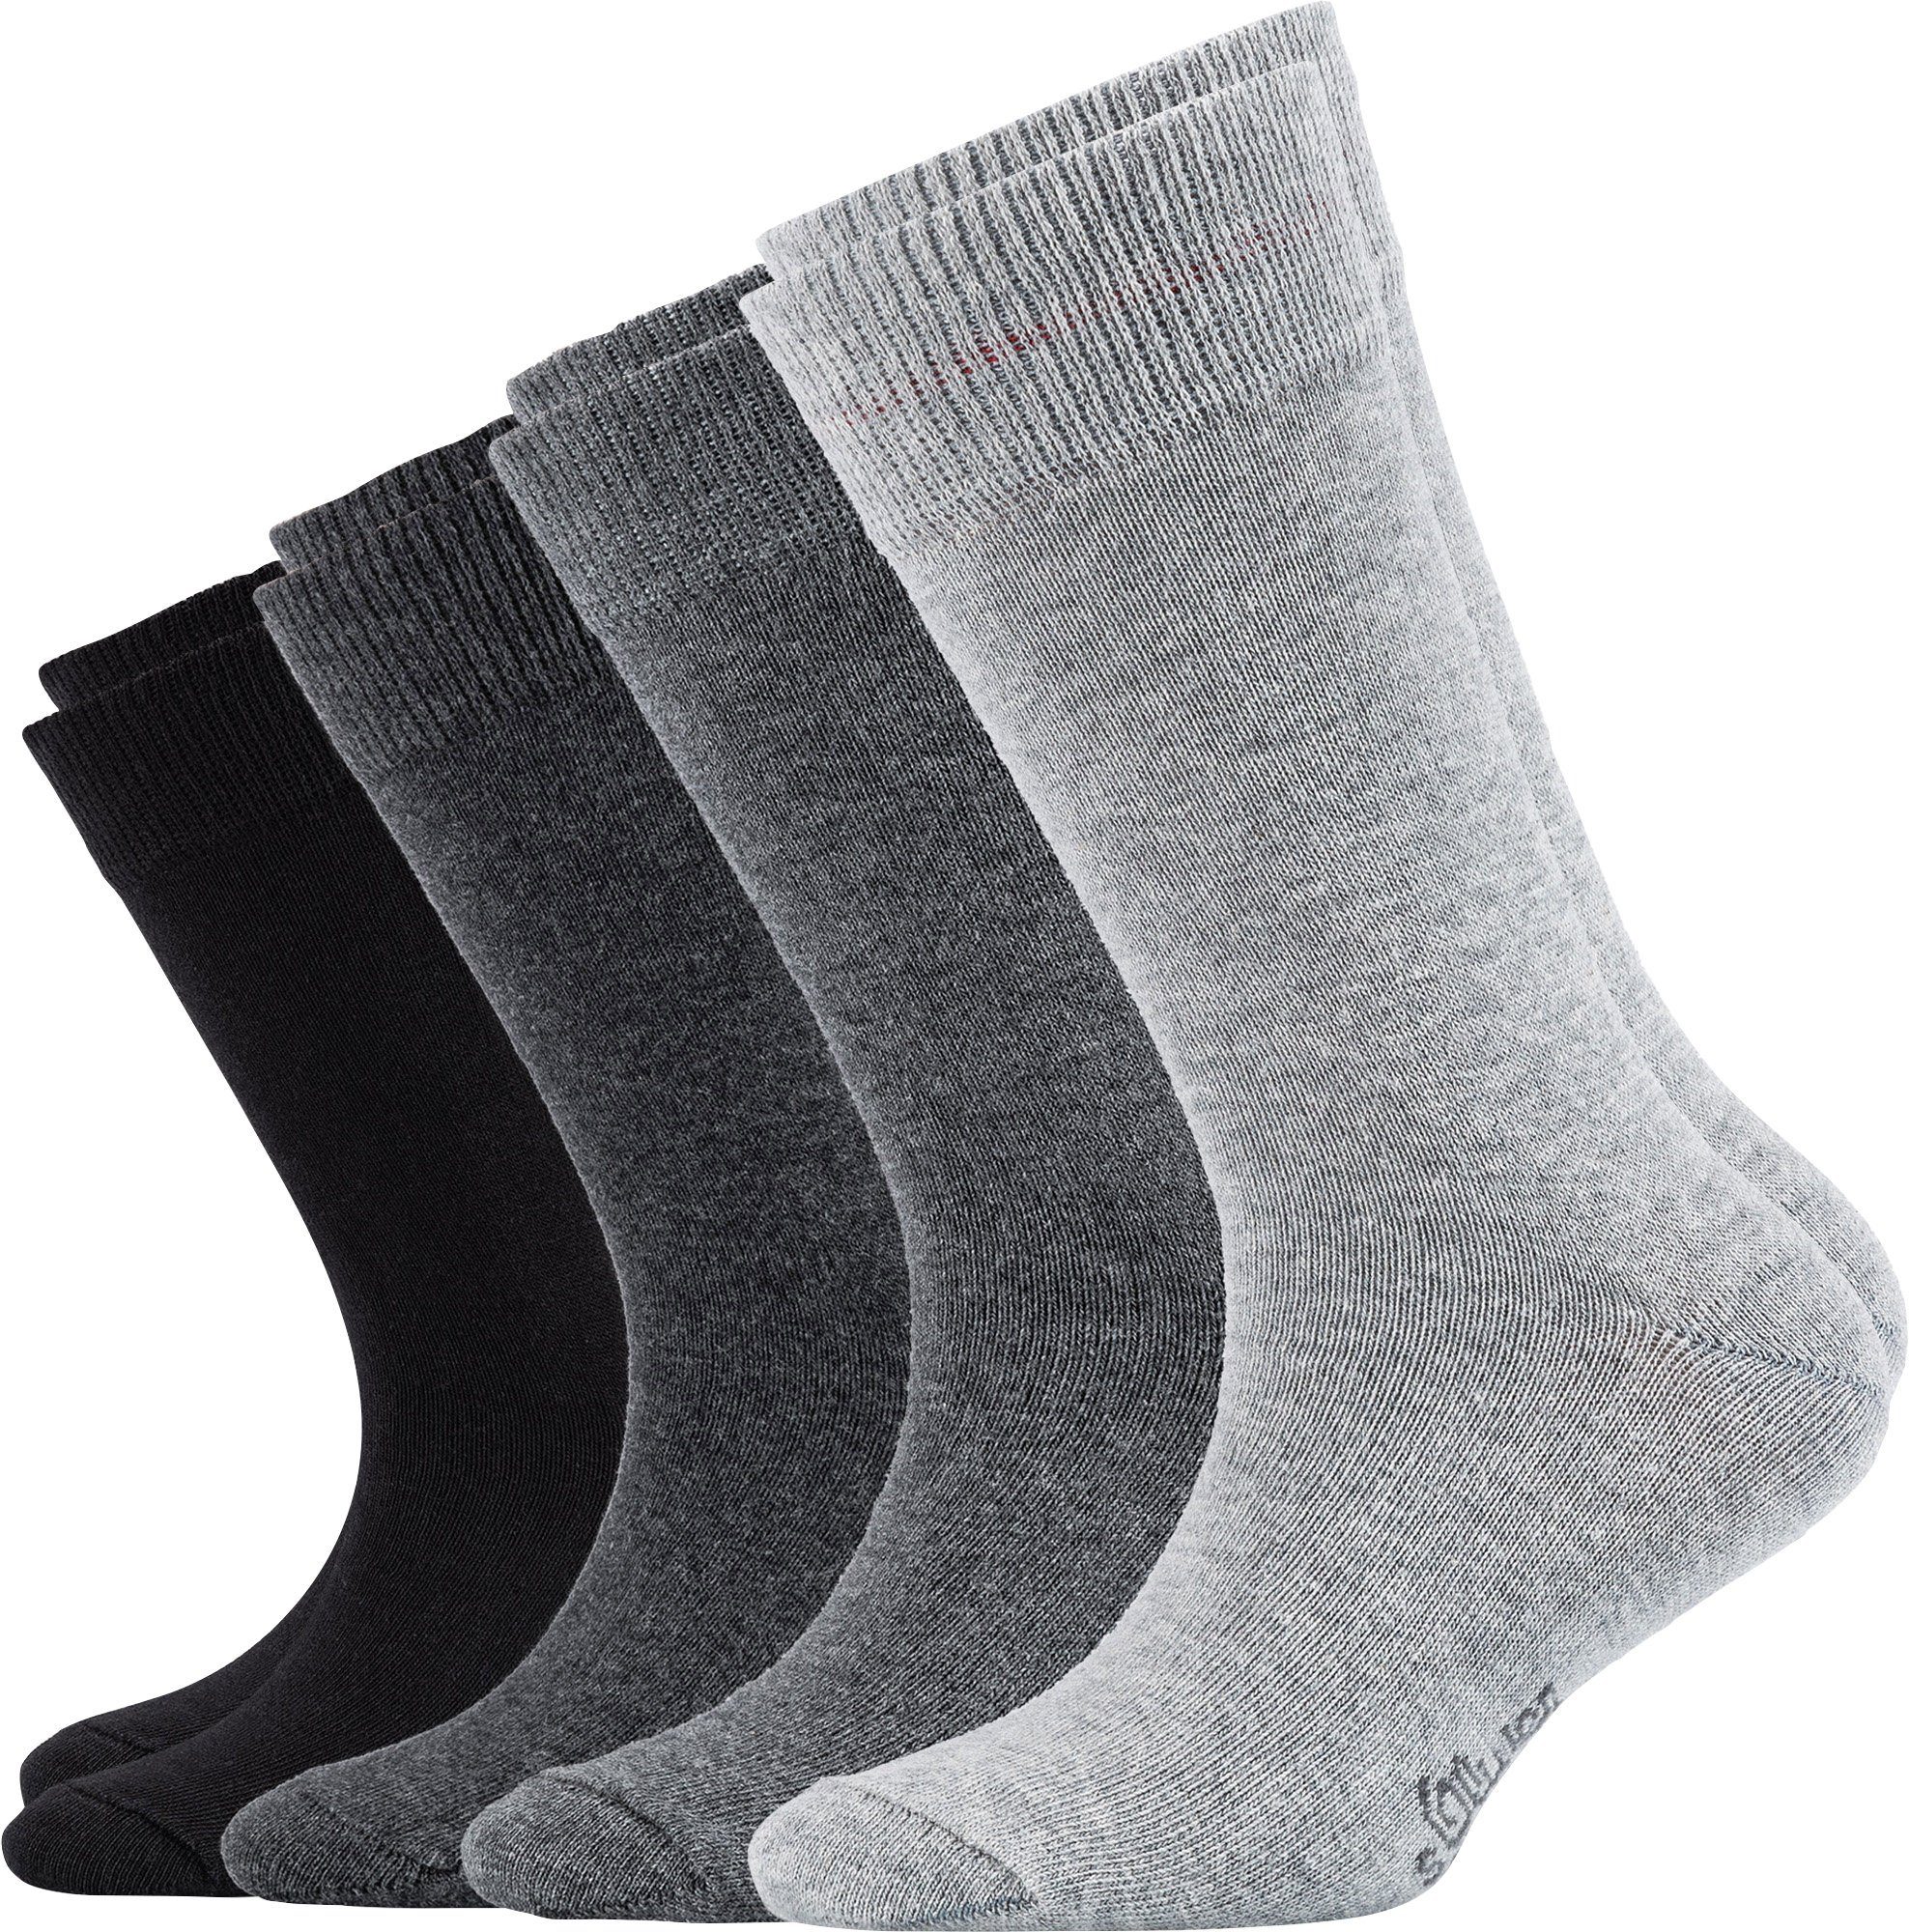 Uni grau/schwarz Paar Kinder-Socken 4 s.Oliver Socken